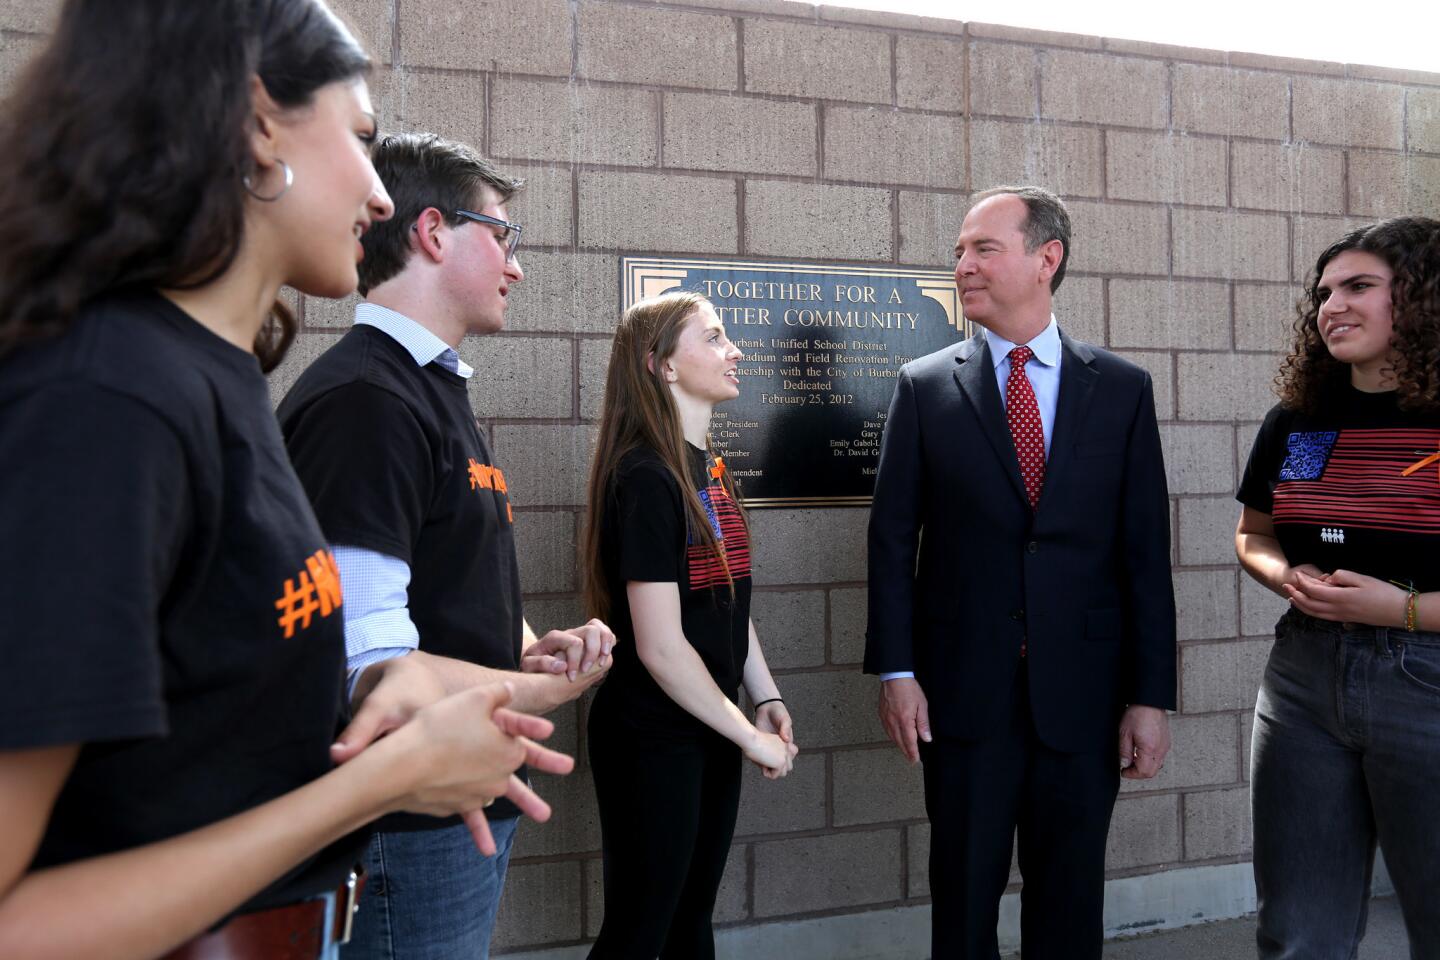 Photo Gallery: Congressman Schiff speaks at Burroughs High rally against gun violence